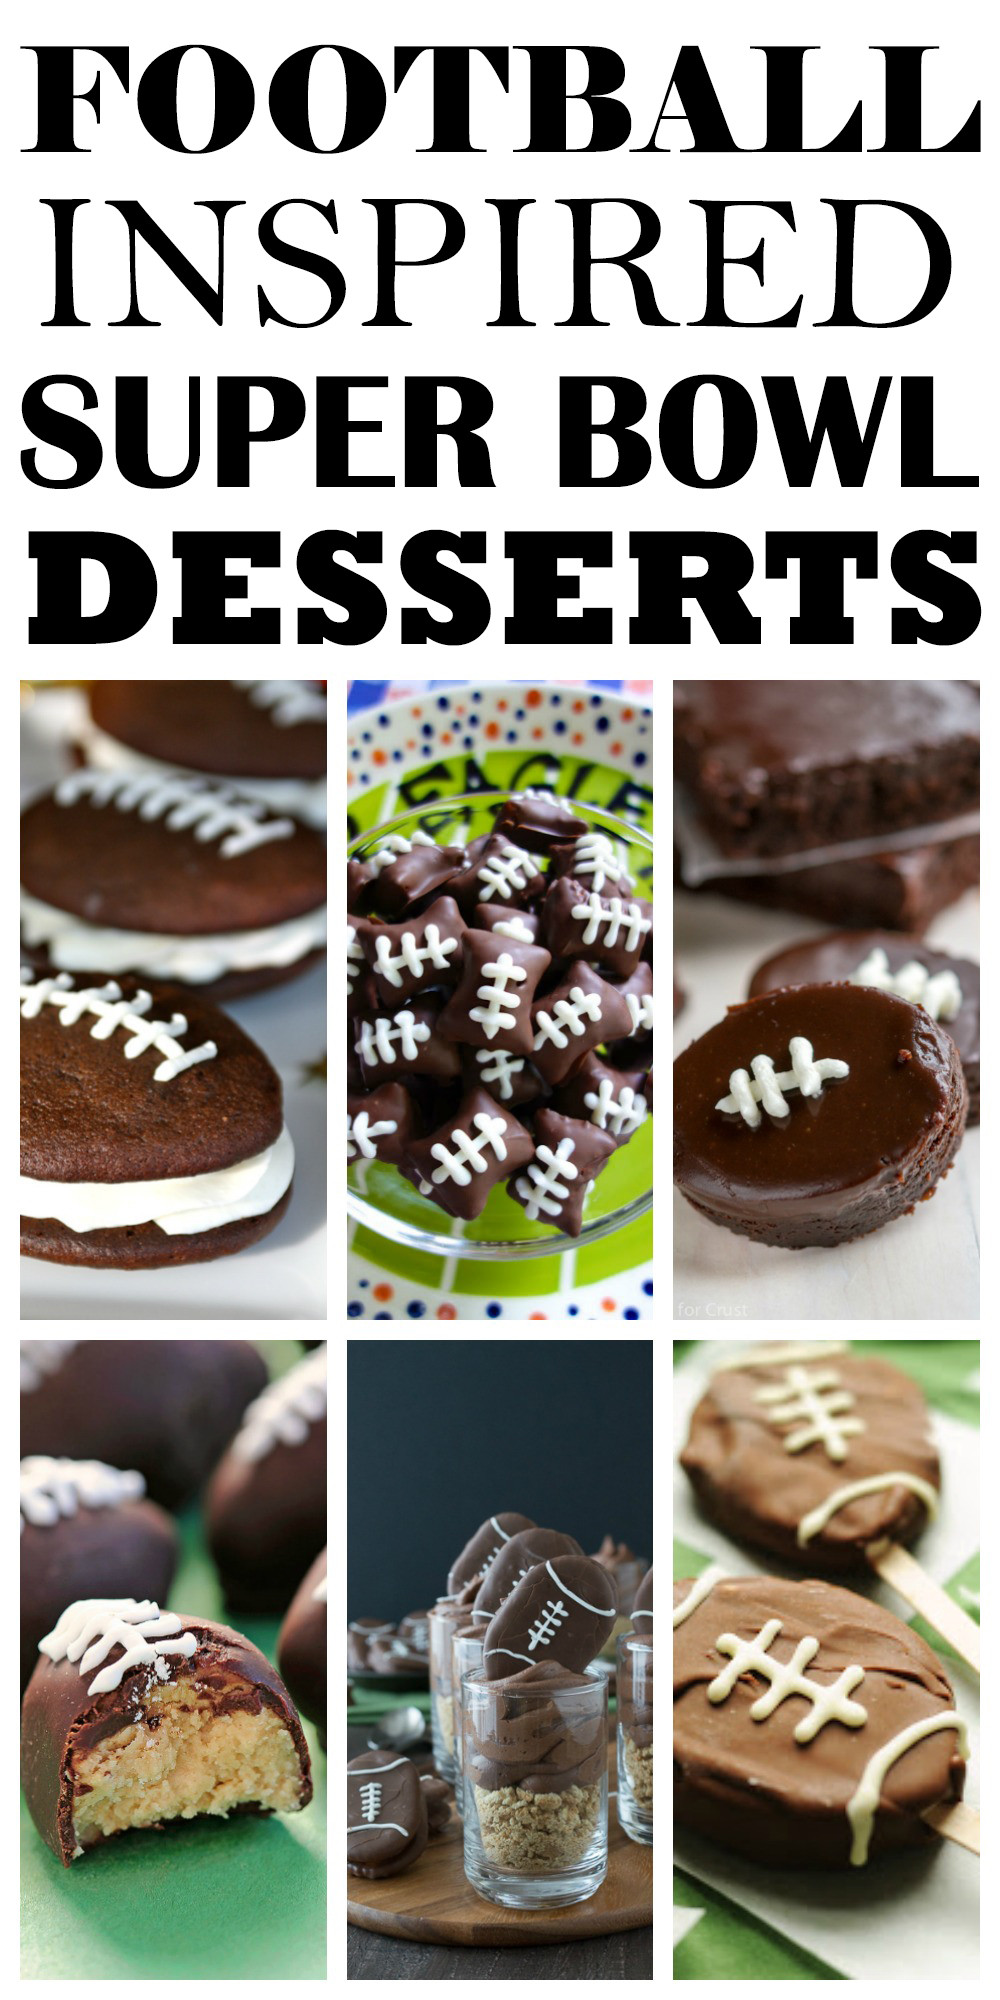 Super Bowl Theme Desserts
 Top Draft Pick Super Bowl Party Desserts THE BLOG DORY FITZ